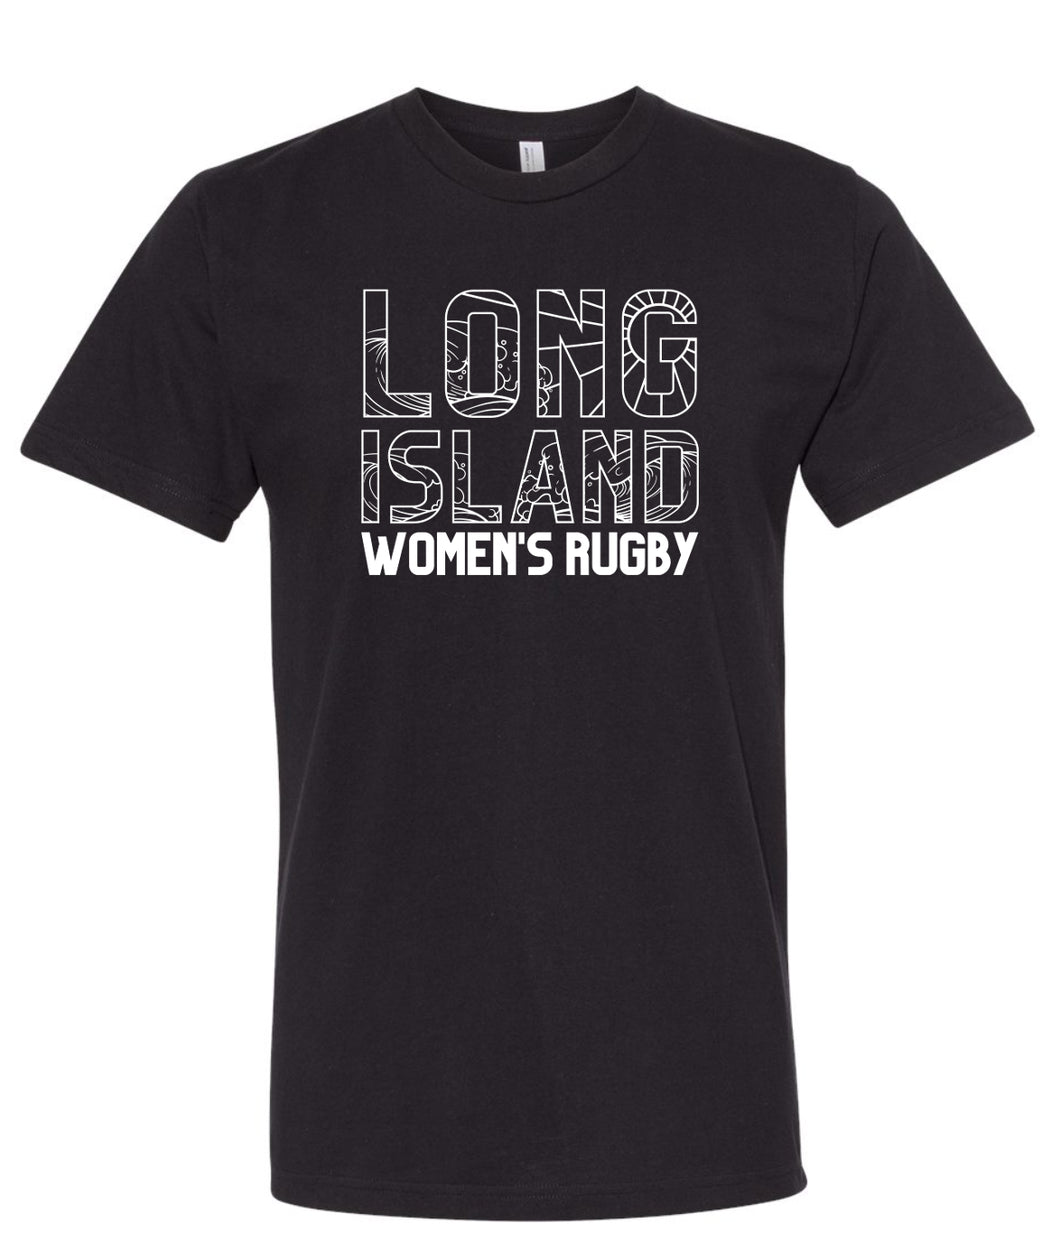 Women's Rugby Tee Long Island 3001